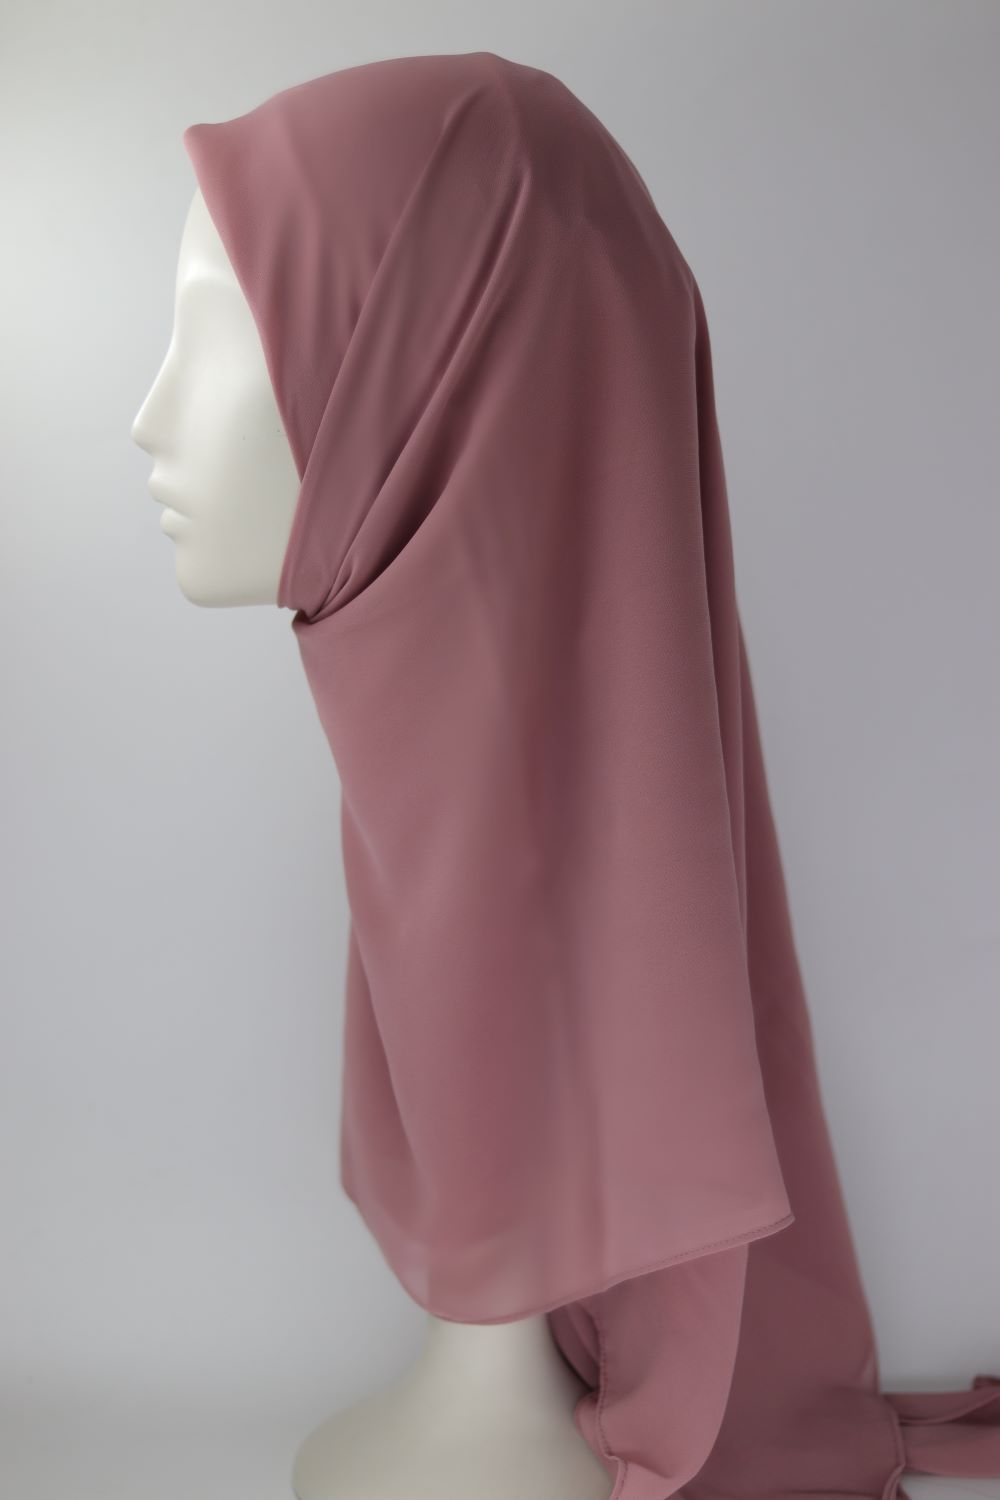 Plain Square Chiffon Hijab Voile Fashion